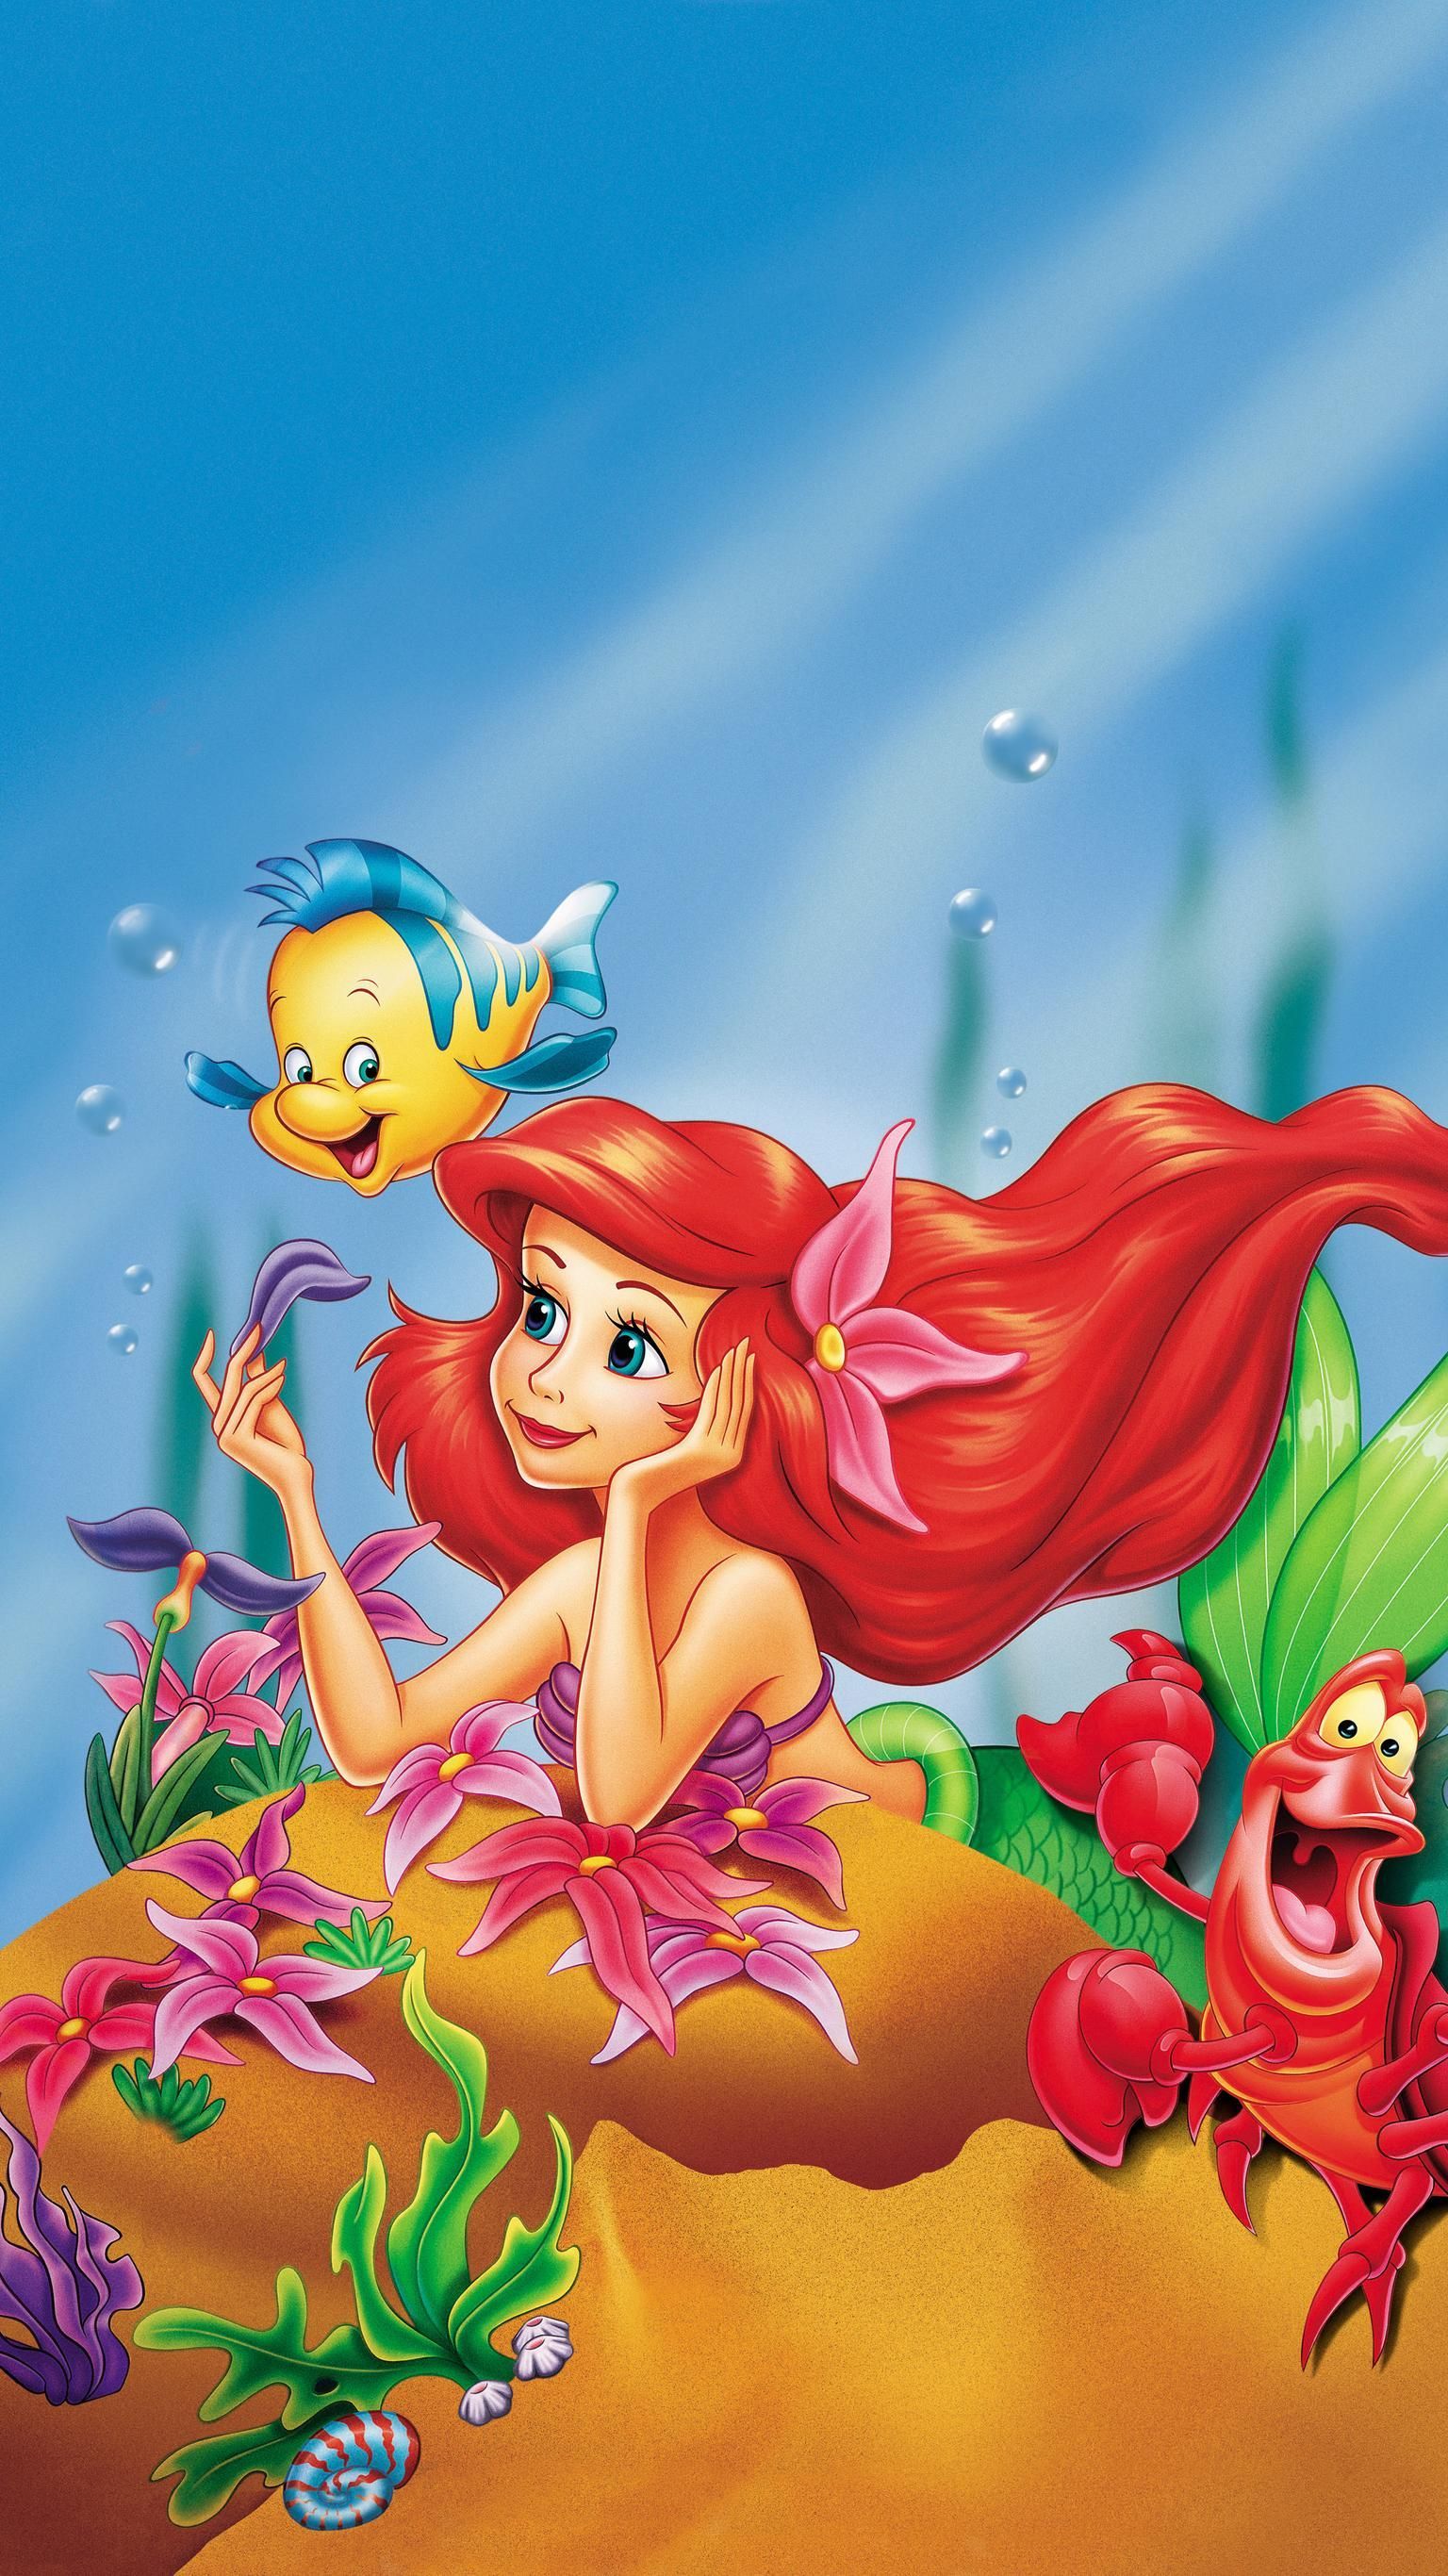 The Little Mermaid (1989) Phone Wallpaper. Little mermaid